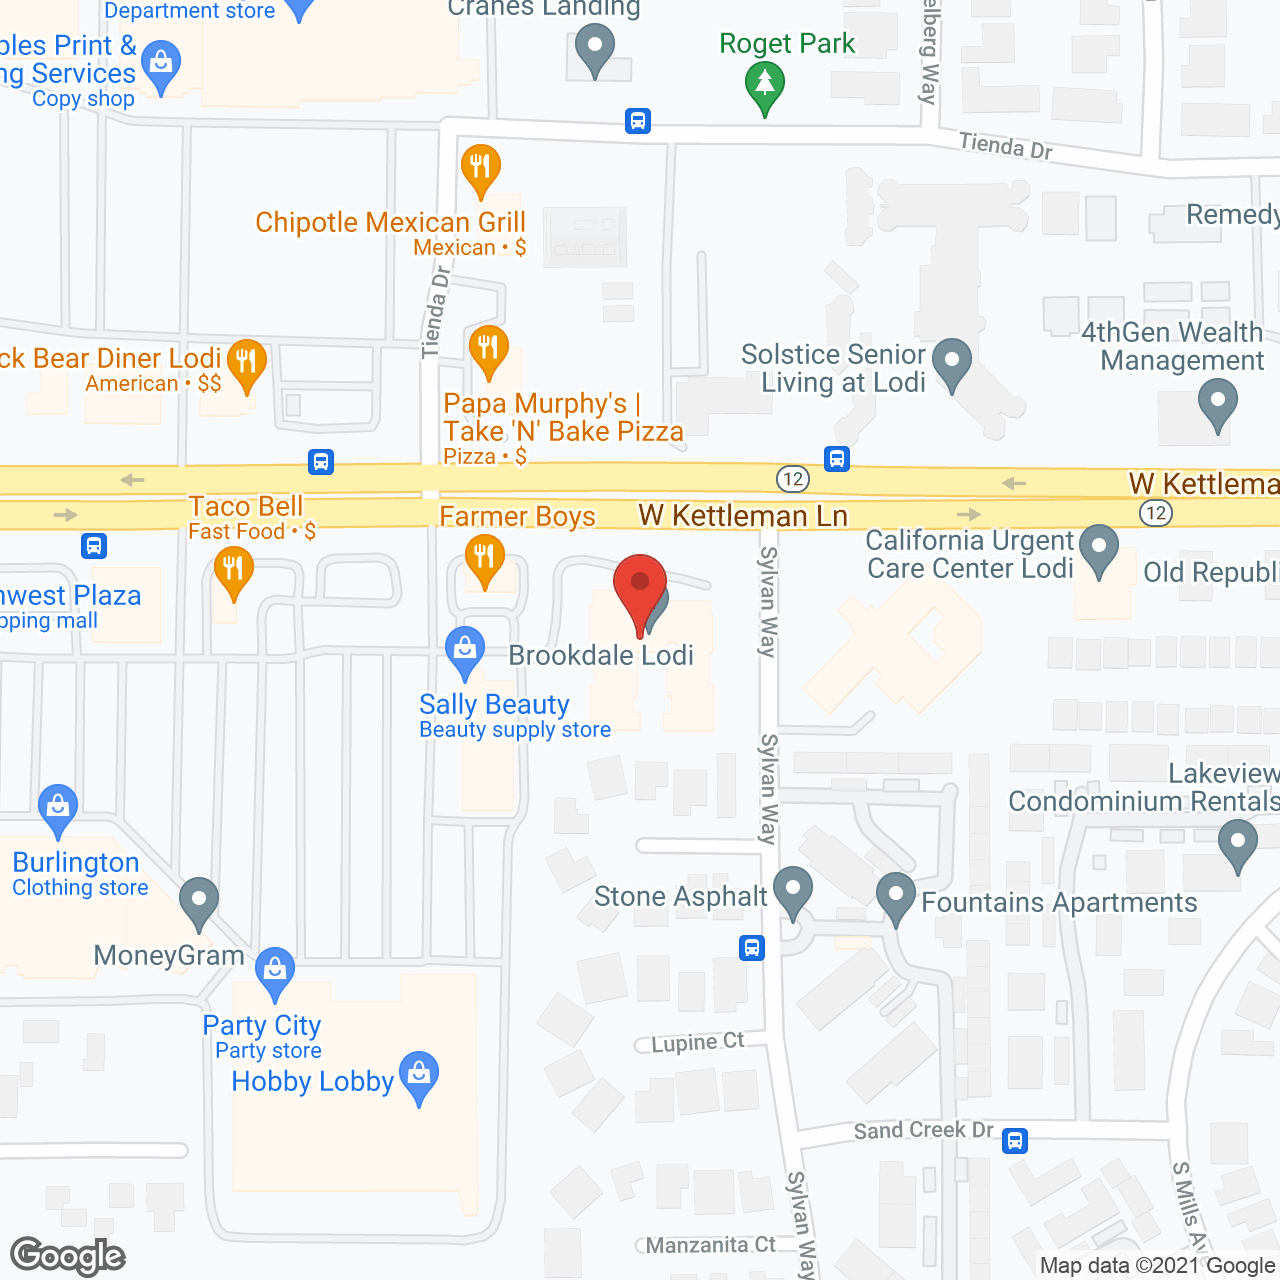 Brookdale Lodi in google map